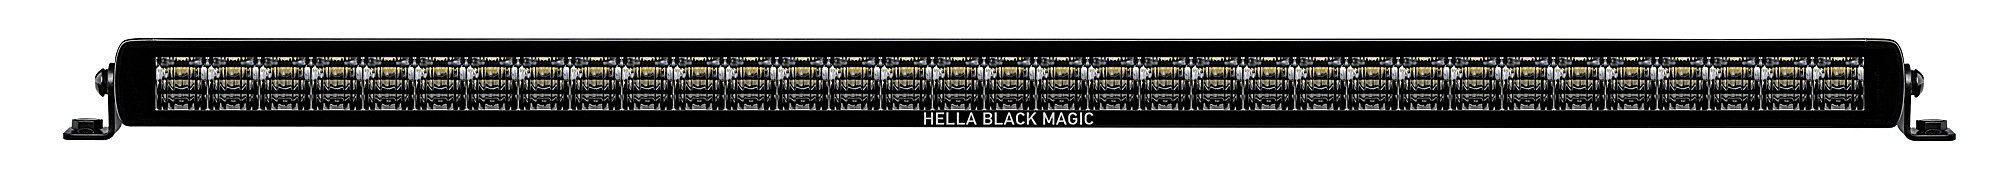 Black Magic LED 20 Slim Lightbar